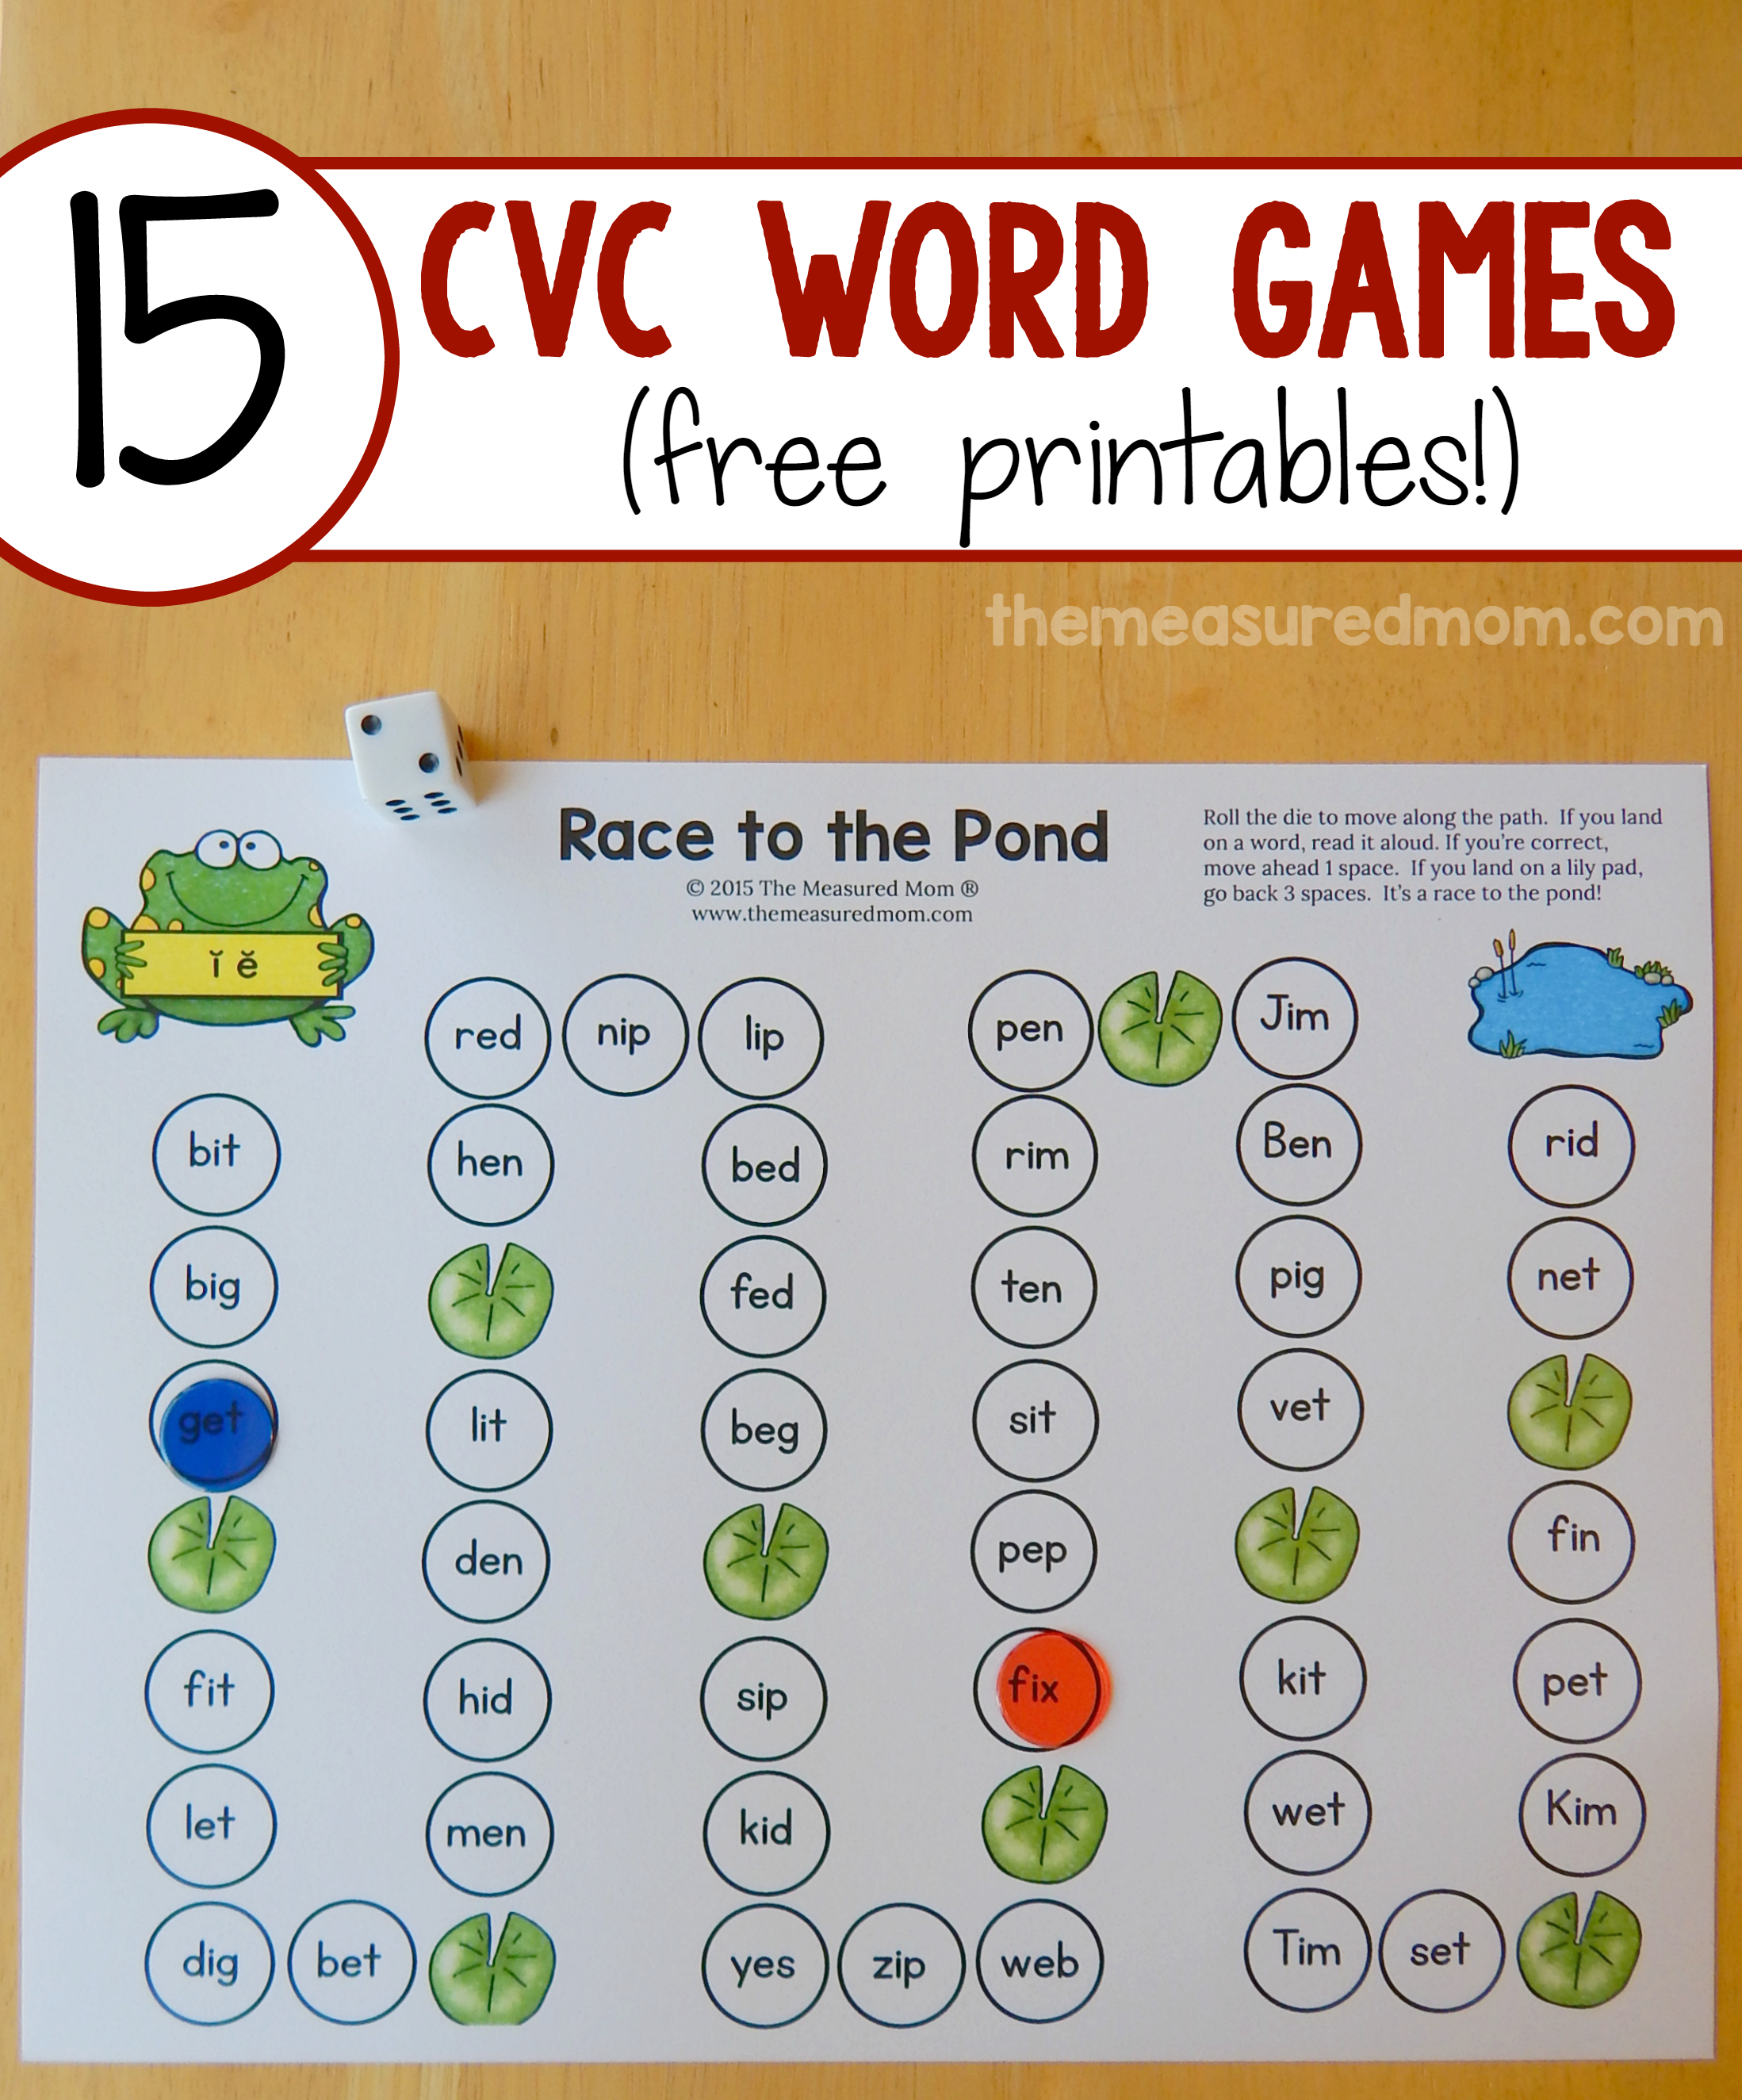 Teach Cvc Words With 15 Free Games! - The Measured Mom - Www Themeasuredmom Com Free Printables